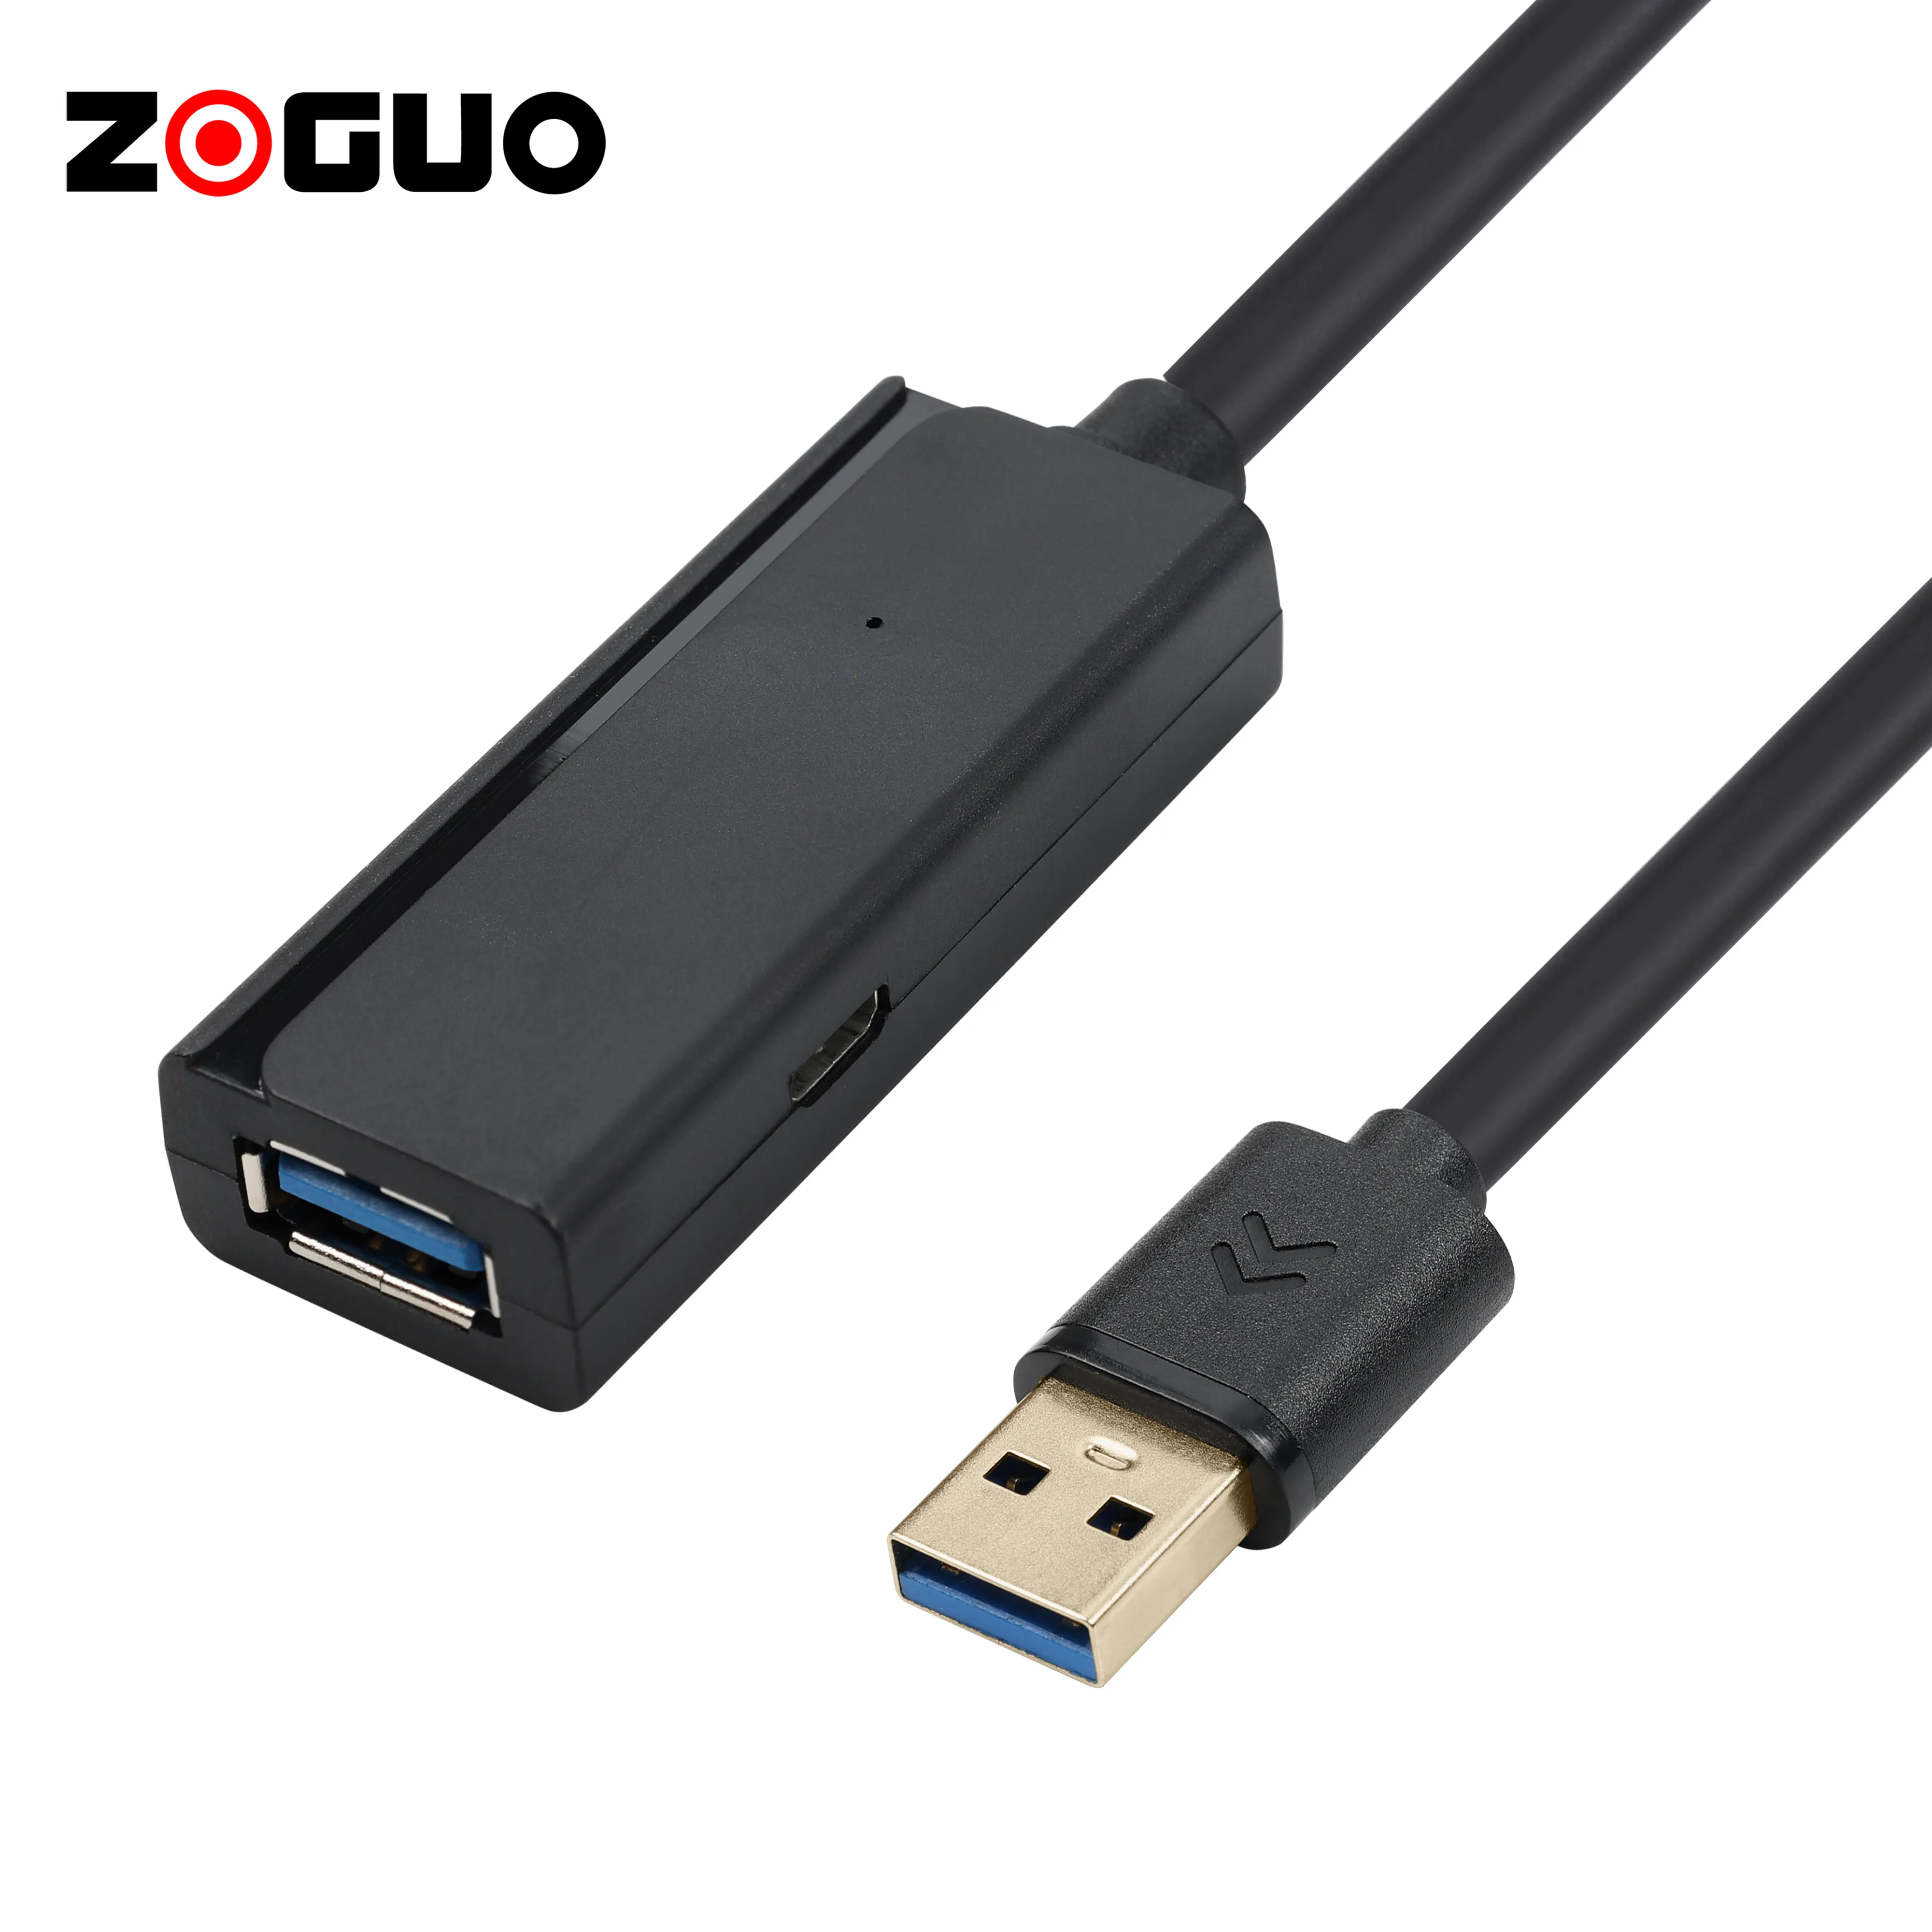 Neuankömmling USB-Verlängerung kabel USB 3.0 Active Repeater-Kabel